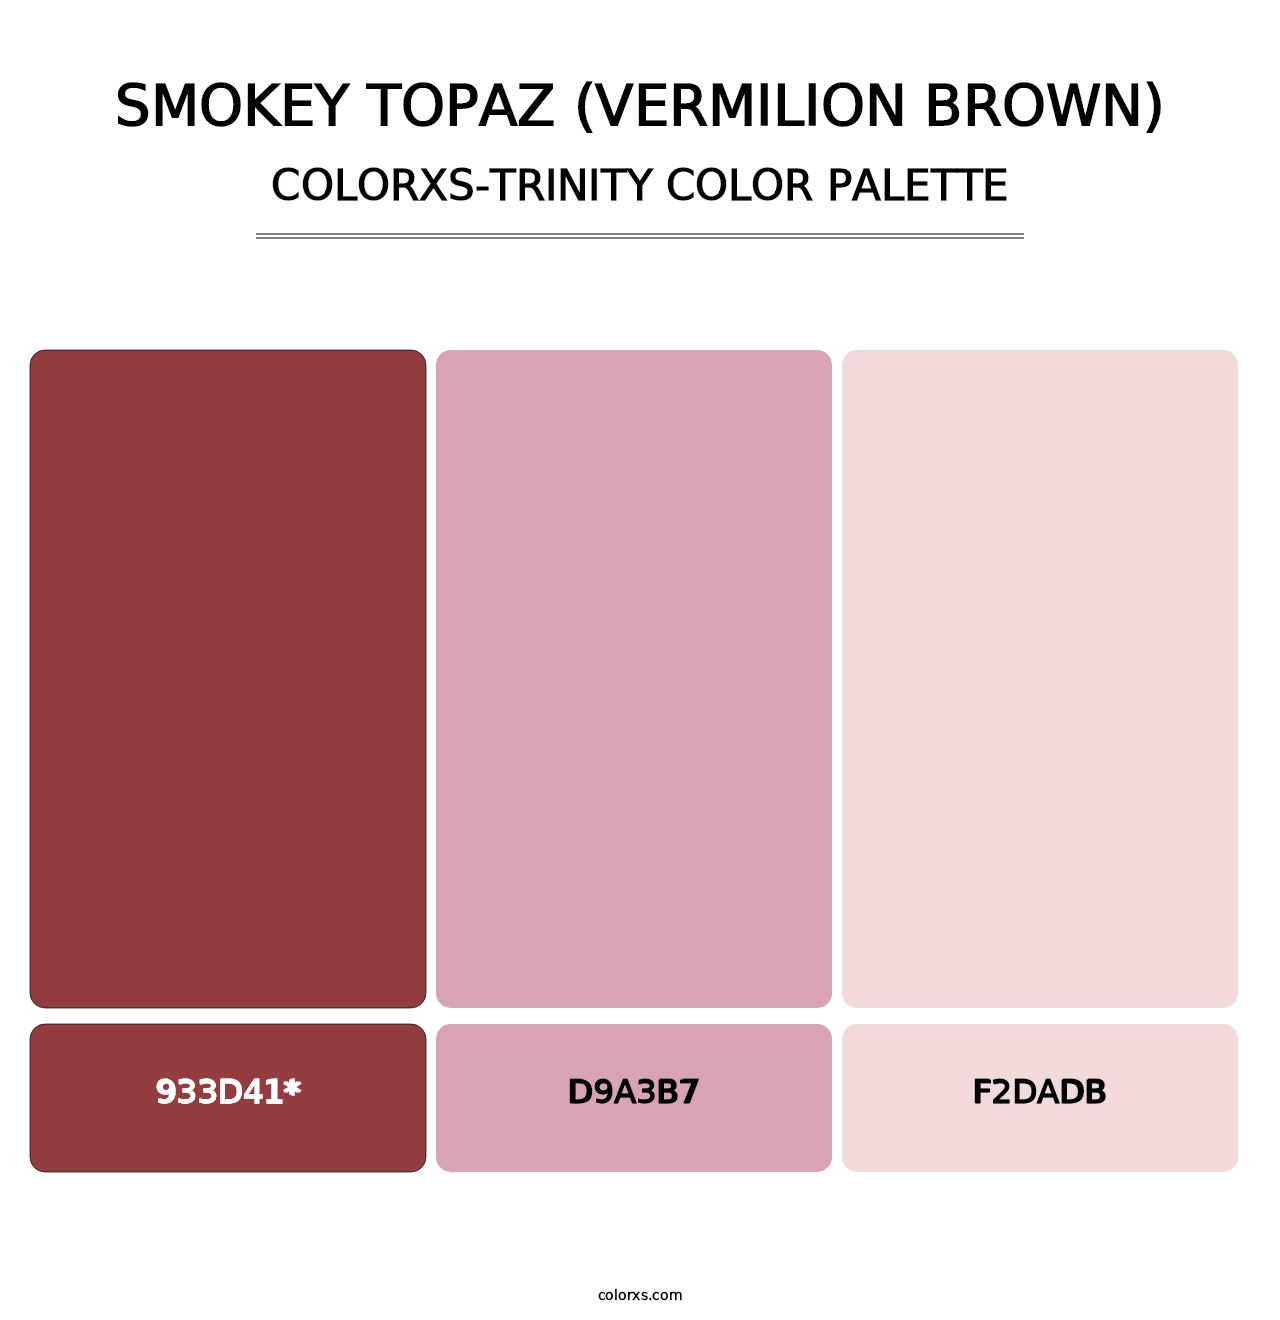 Smokey Topaz (Vermilion Brown) - Colorxs Trinity Palette